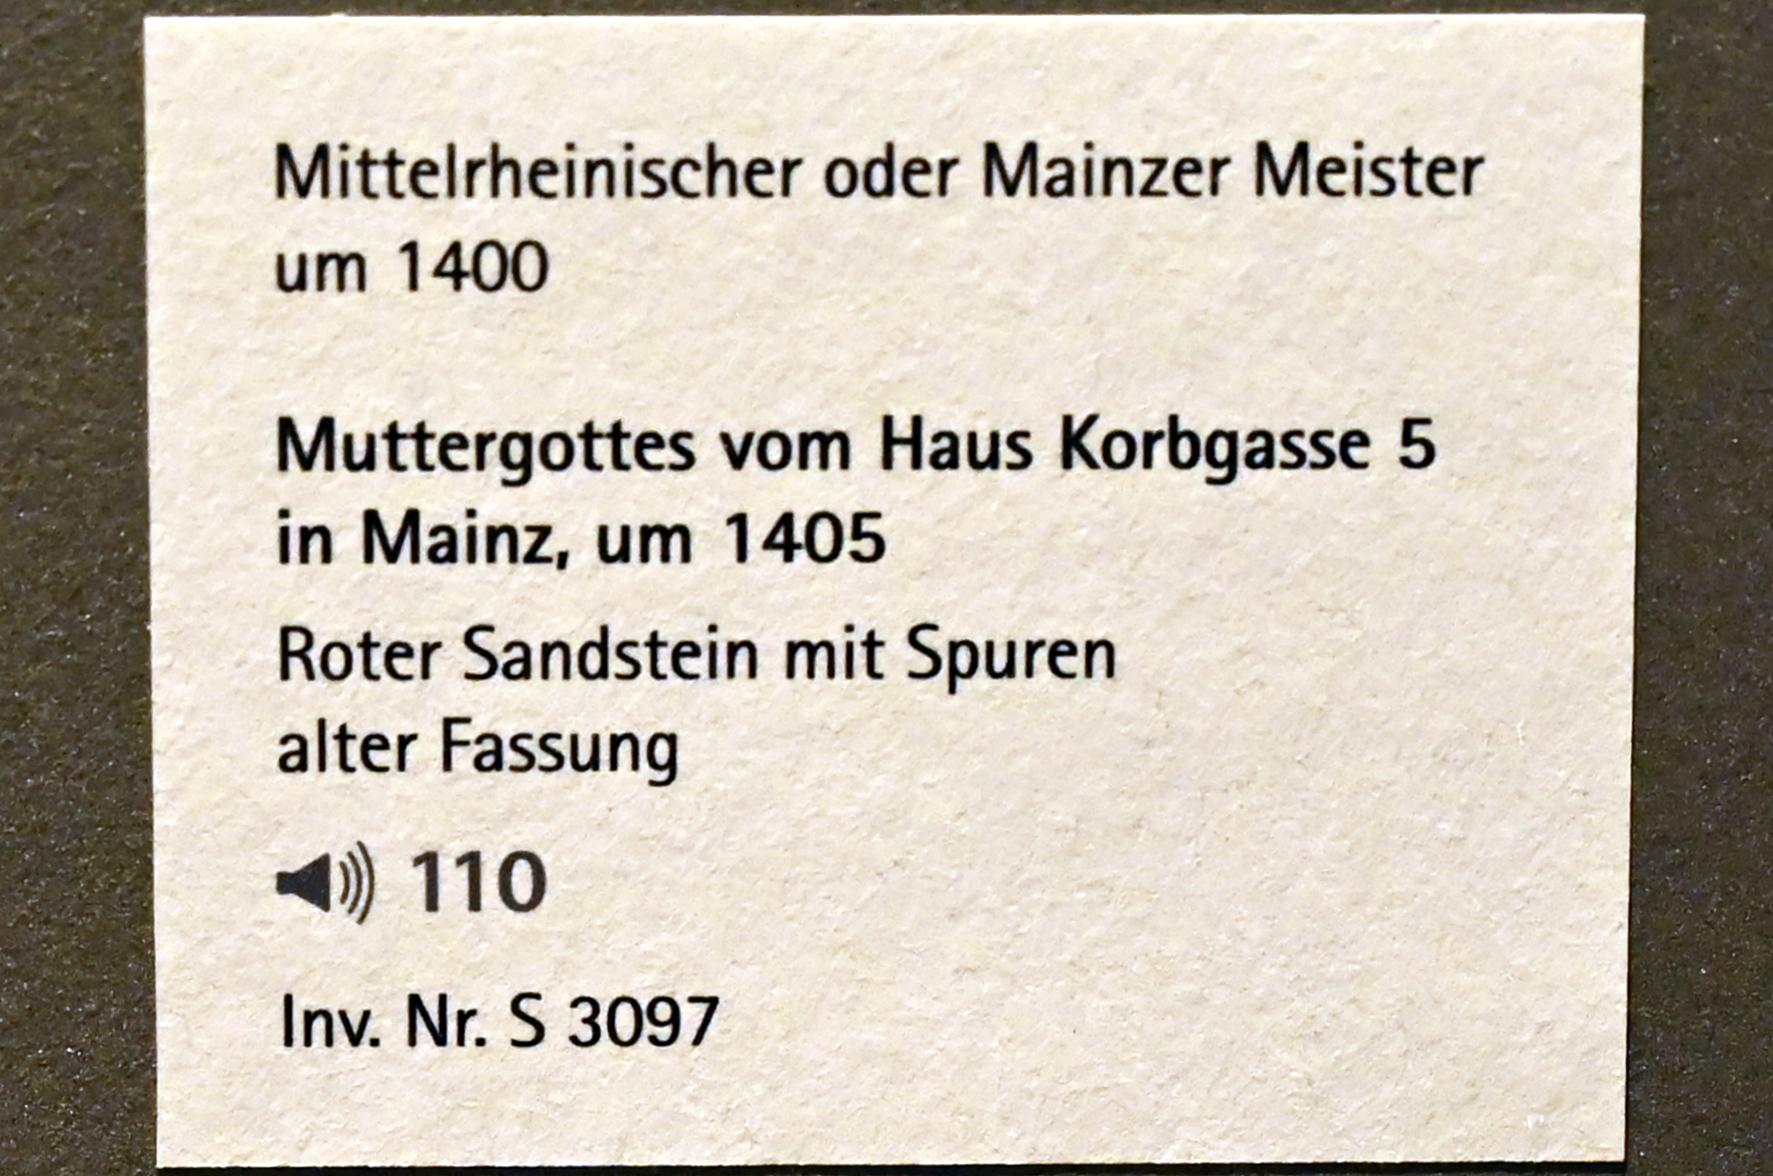 Muttergottes, Mainz, Wohnhaus Korbgasse 5, jetzt Mainz, Landesmuseum, Schaudepot, um 1405, Bild 2/2